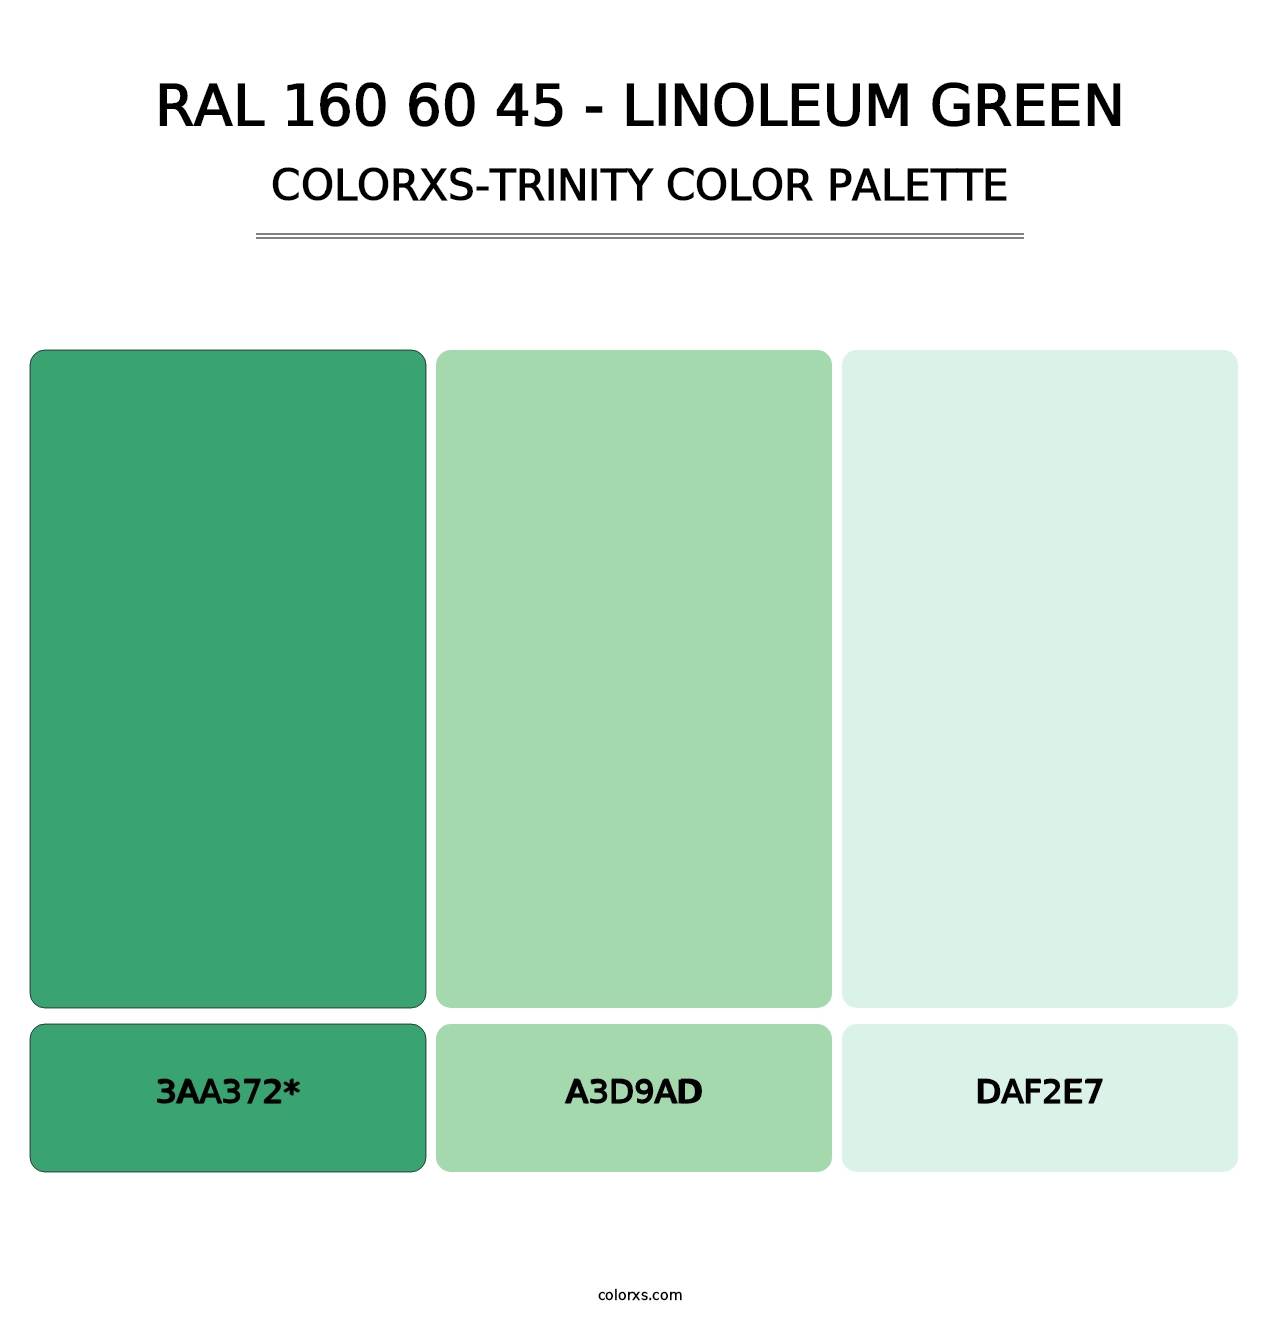 RAL 160 60 45 - Linoleum Green - Colorxs Trinity Palette